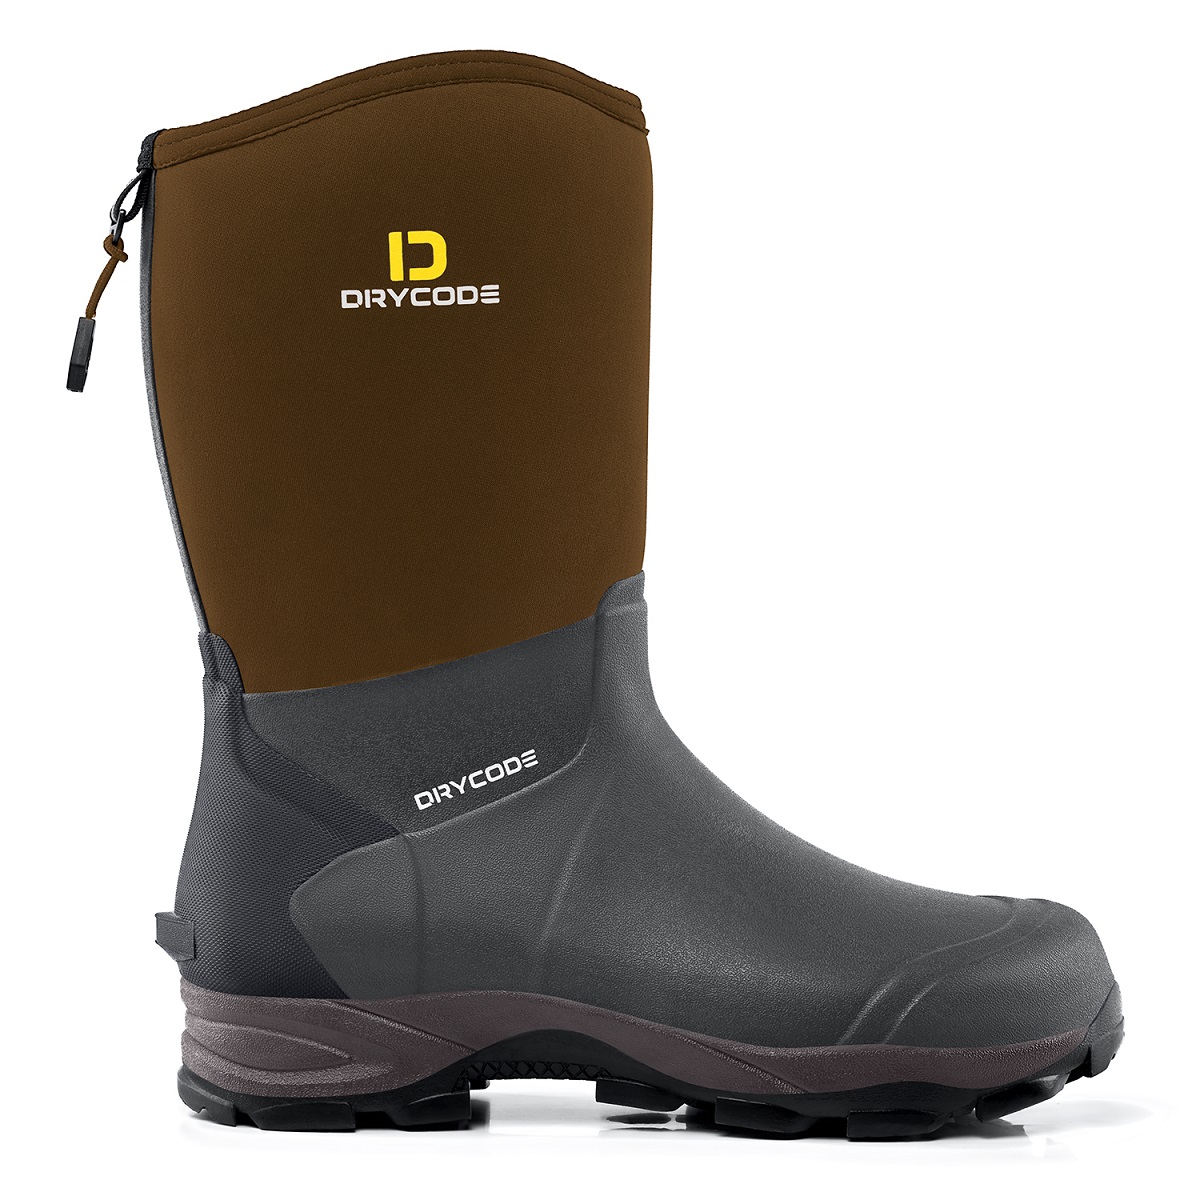 https://img-va.myshopline.com/image/store/1691119653301/DRYCODE-Mid-Calf-Men-s-Rain-Boots-(Brown),-4-5mm-Neoprene-Slip-On-Work-Boots-(1).jpeg?w=1200&h=1200